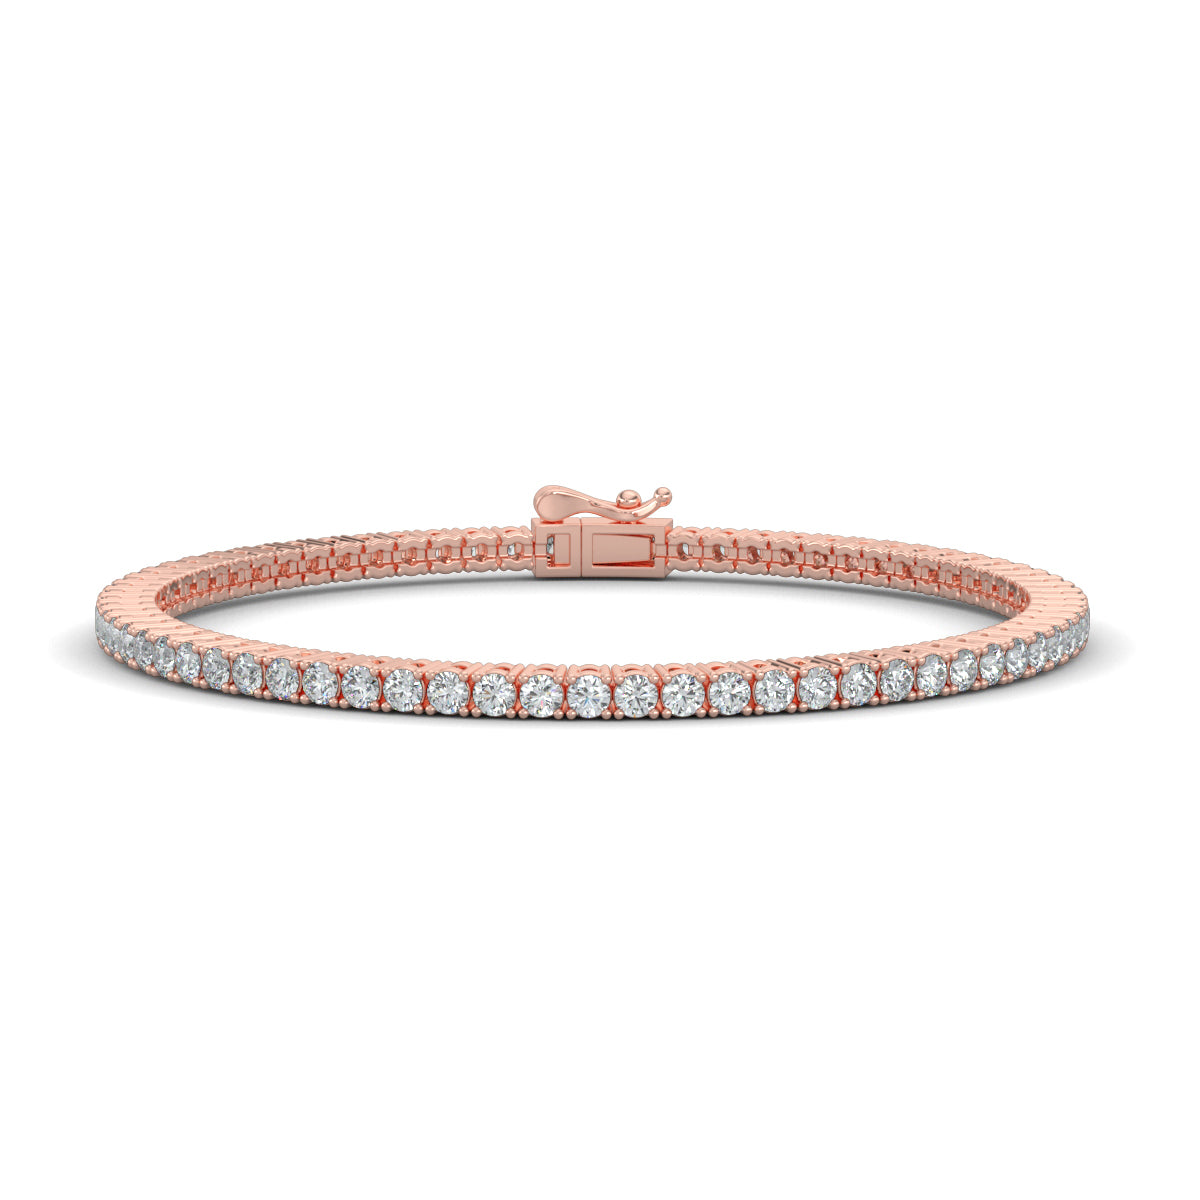 Rose Gold, Diamond Bracelet, Natural diamond bracelet, Lab-grown diamond bracelet, 5-Pointer Tennis Bracelet, tennis bracelet, prong setting, jewelry